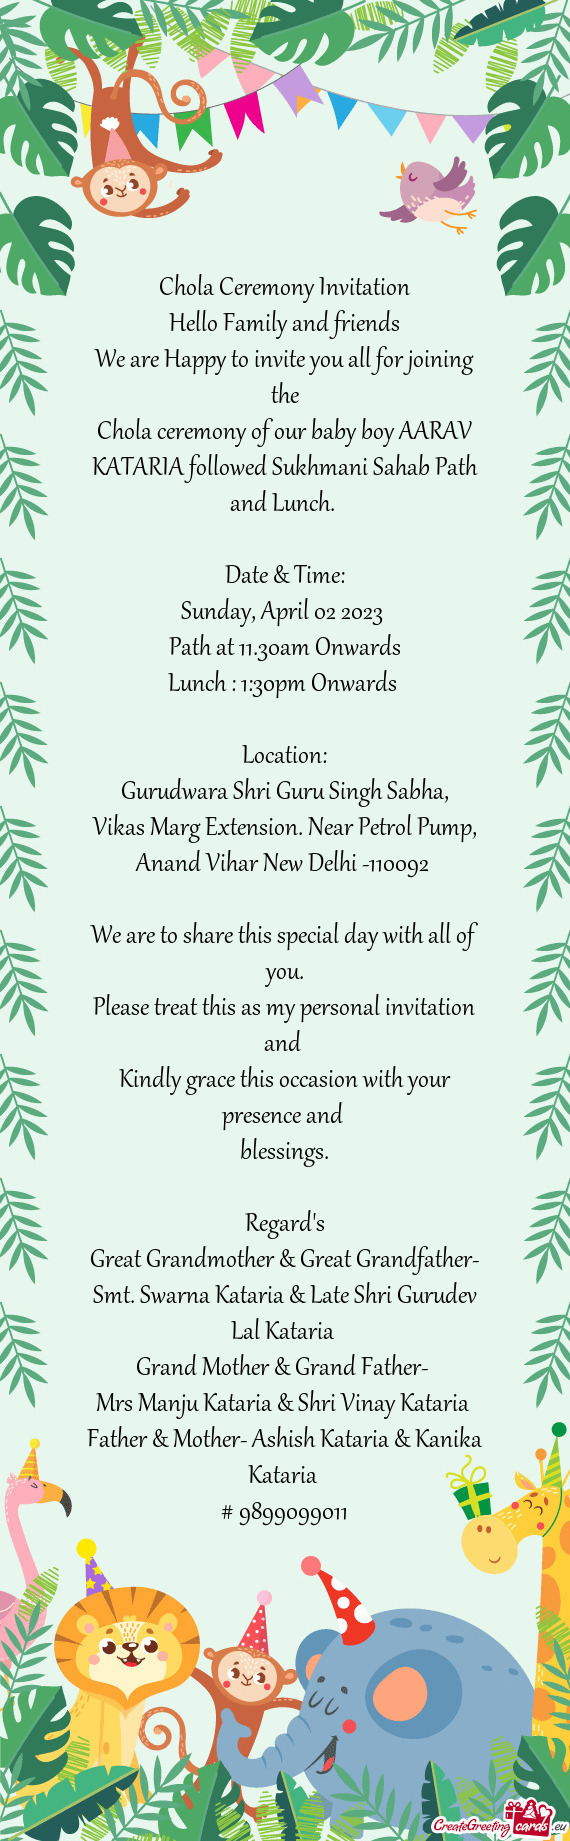 Vikas Marg Extension. Near Petrol Pump, Anand Vihar New Delhi -110092